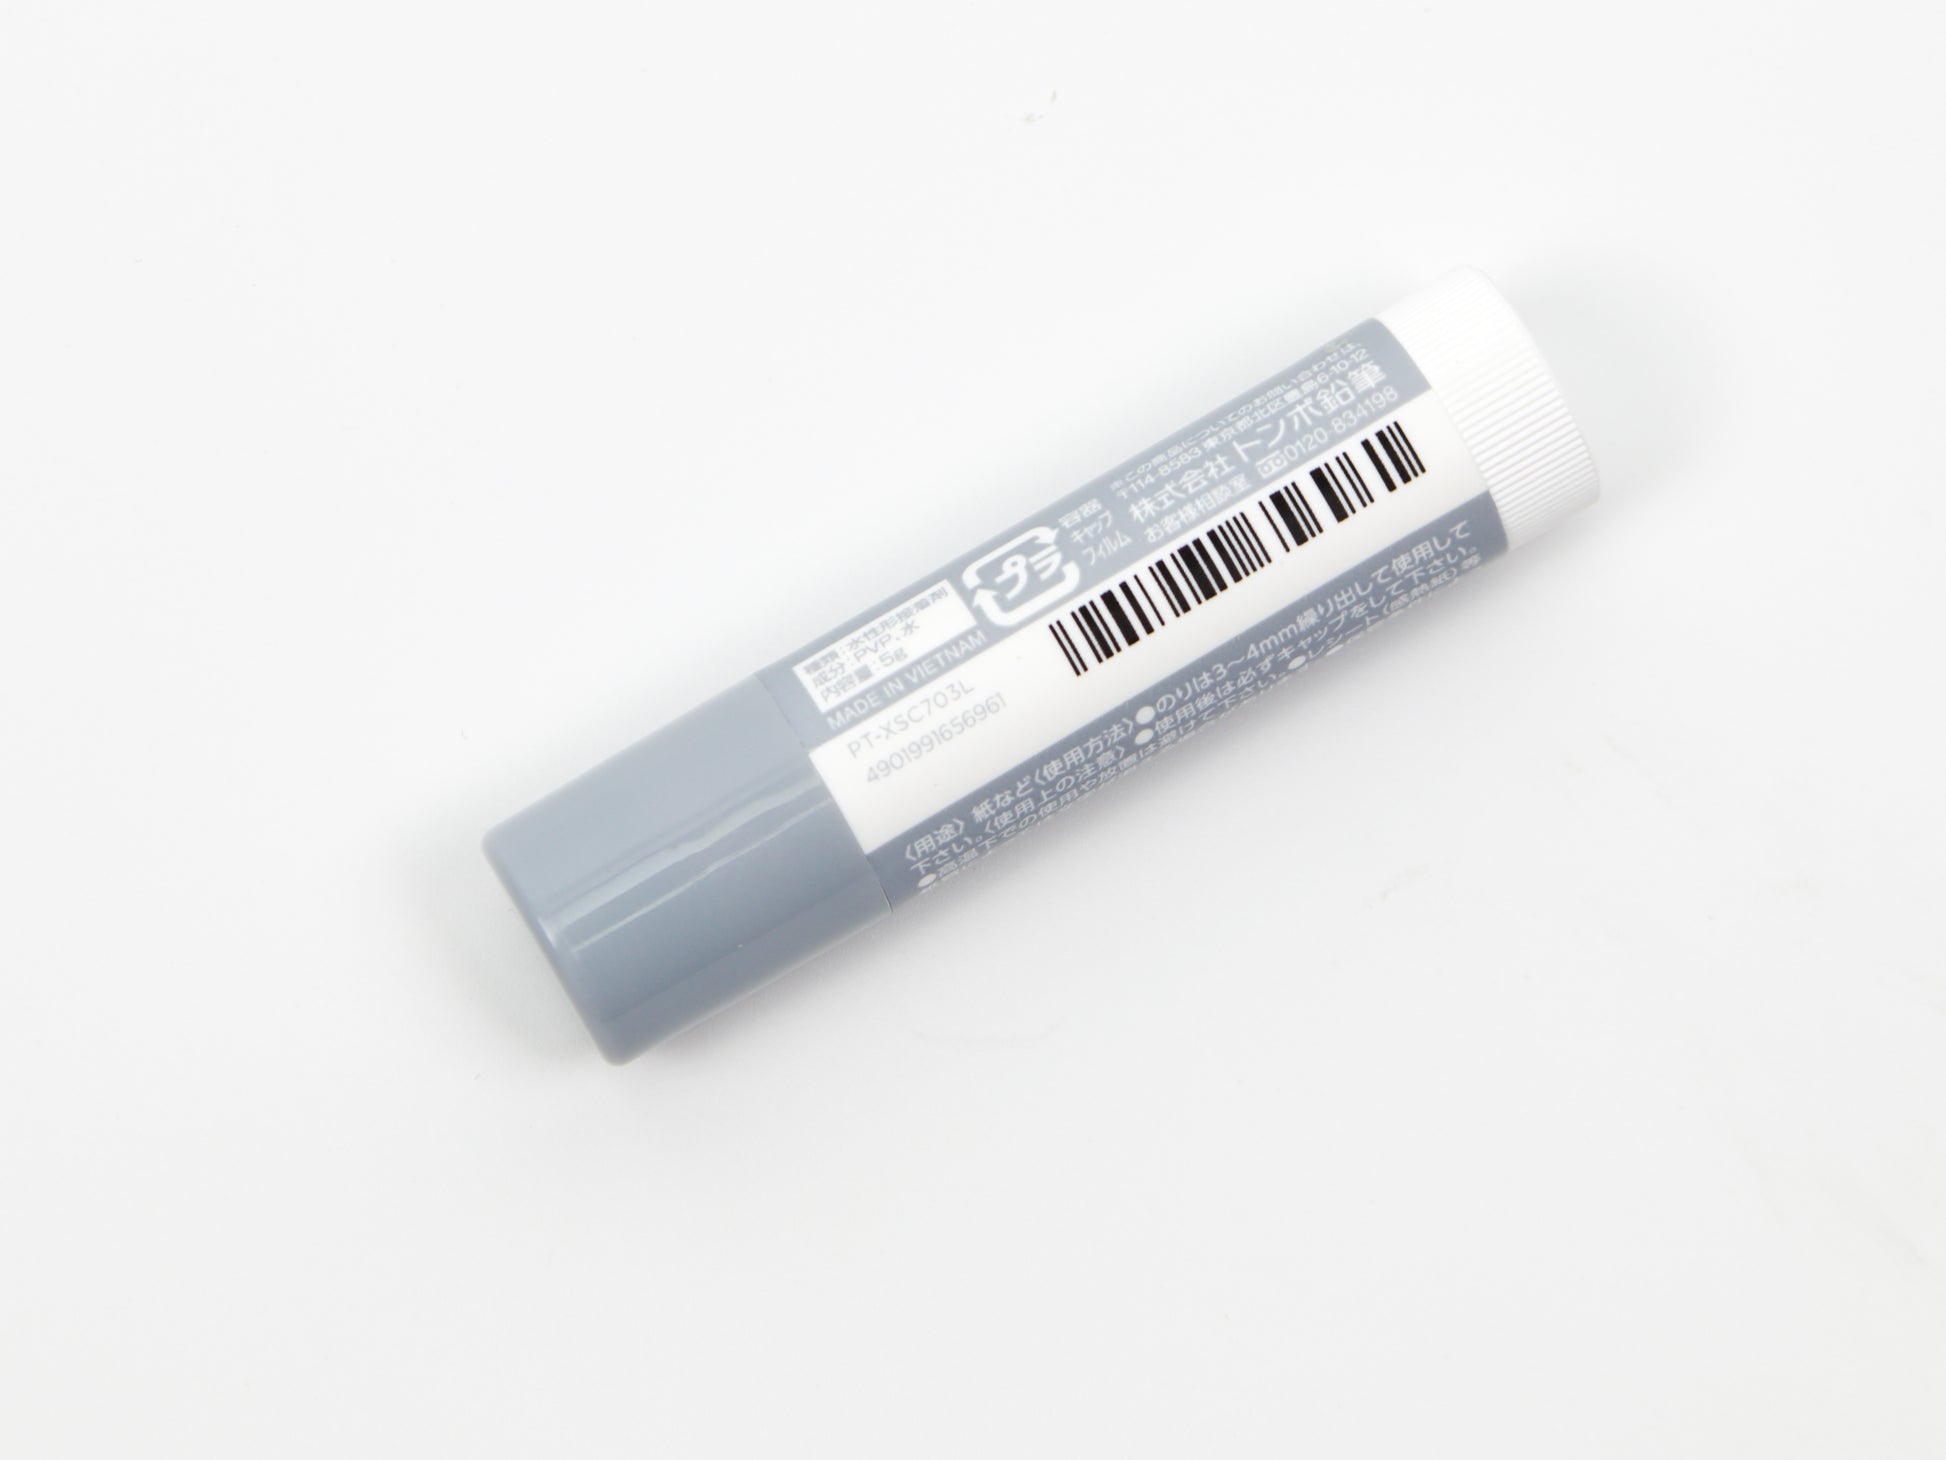 Tombow Mono PiT Glue Stick Ash Color Limited Edition